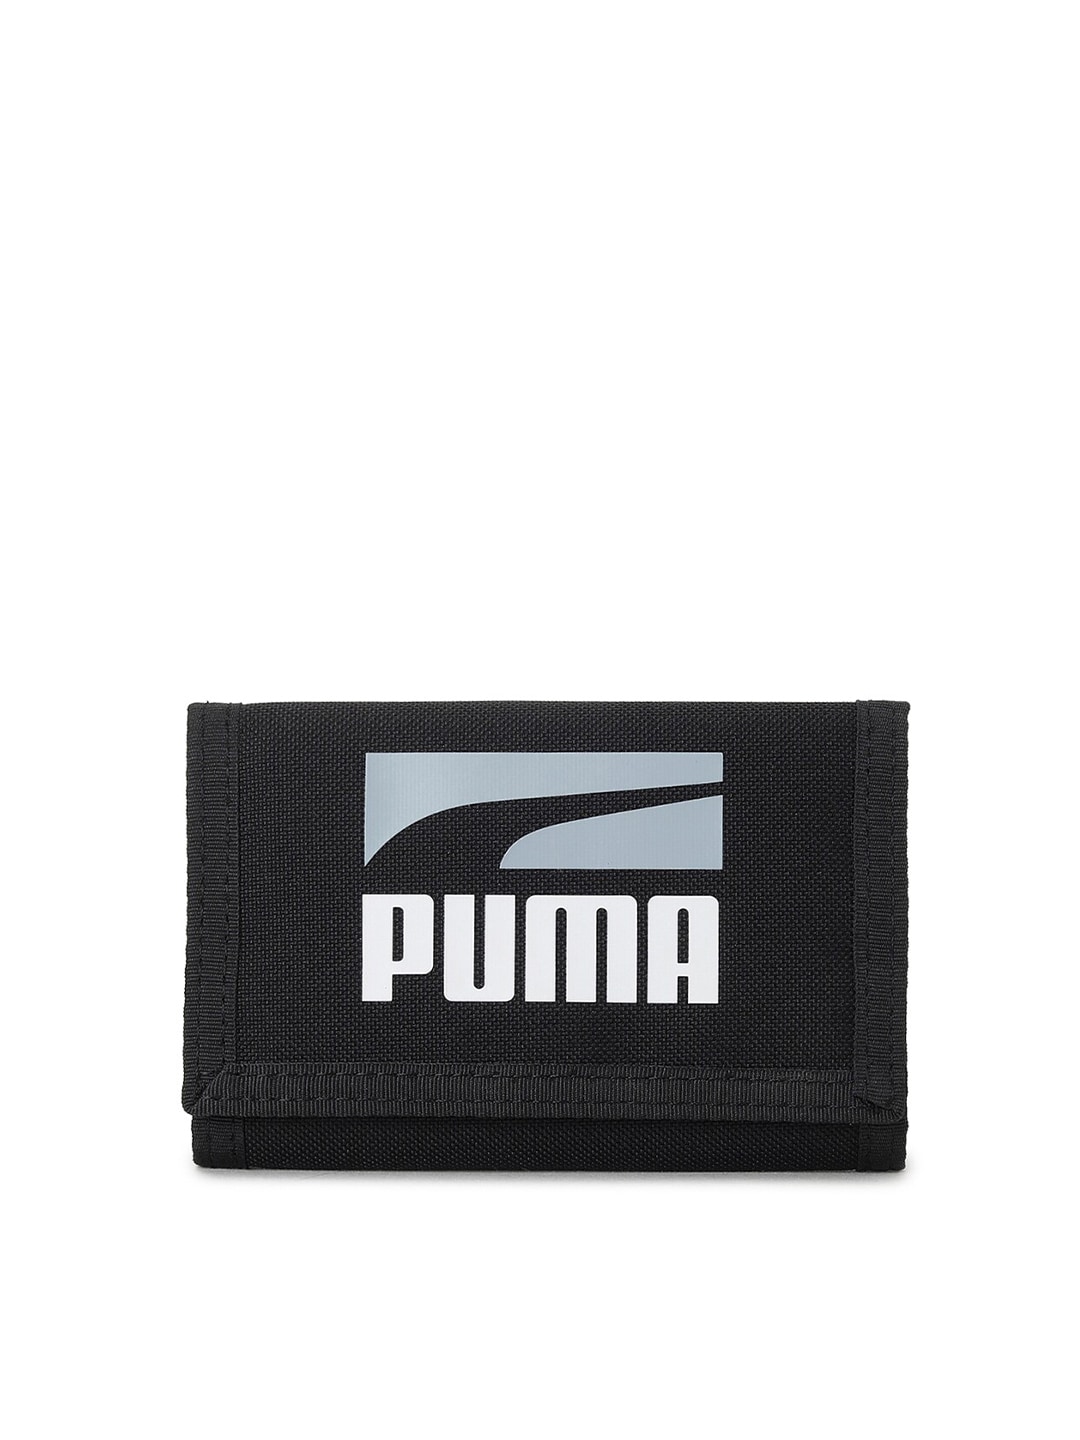 Puma Unisex Black Printed Two Fold Wallet